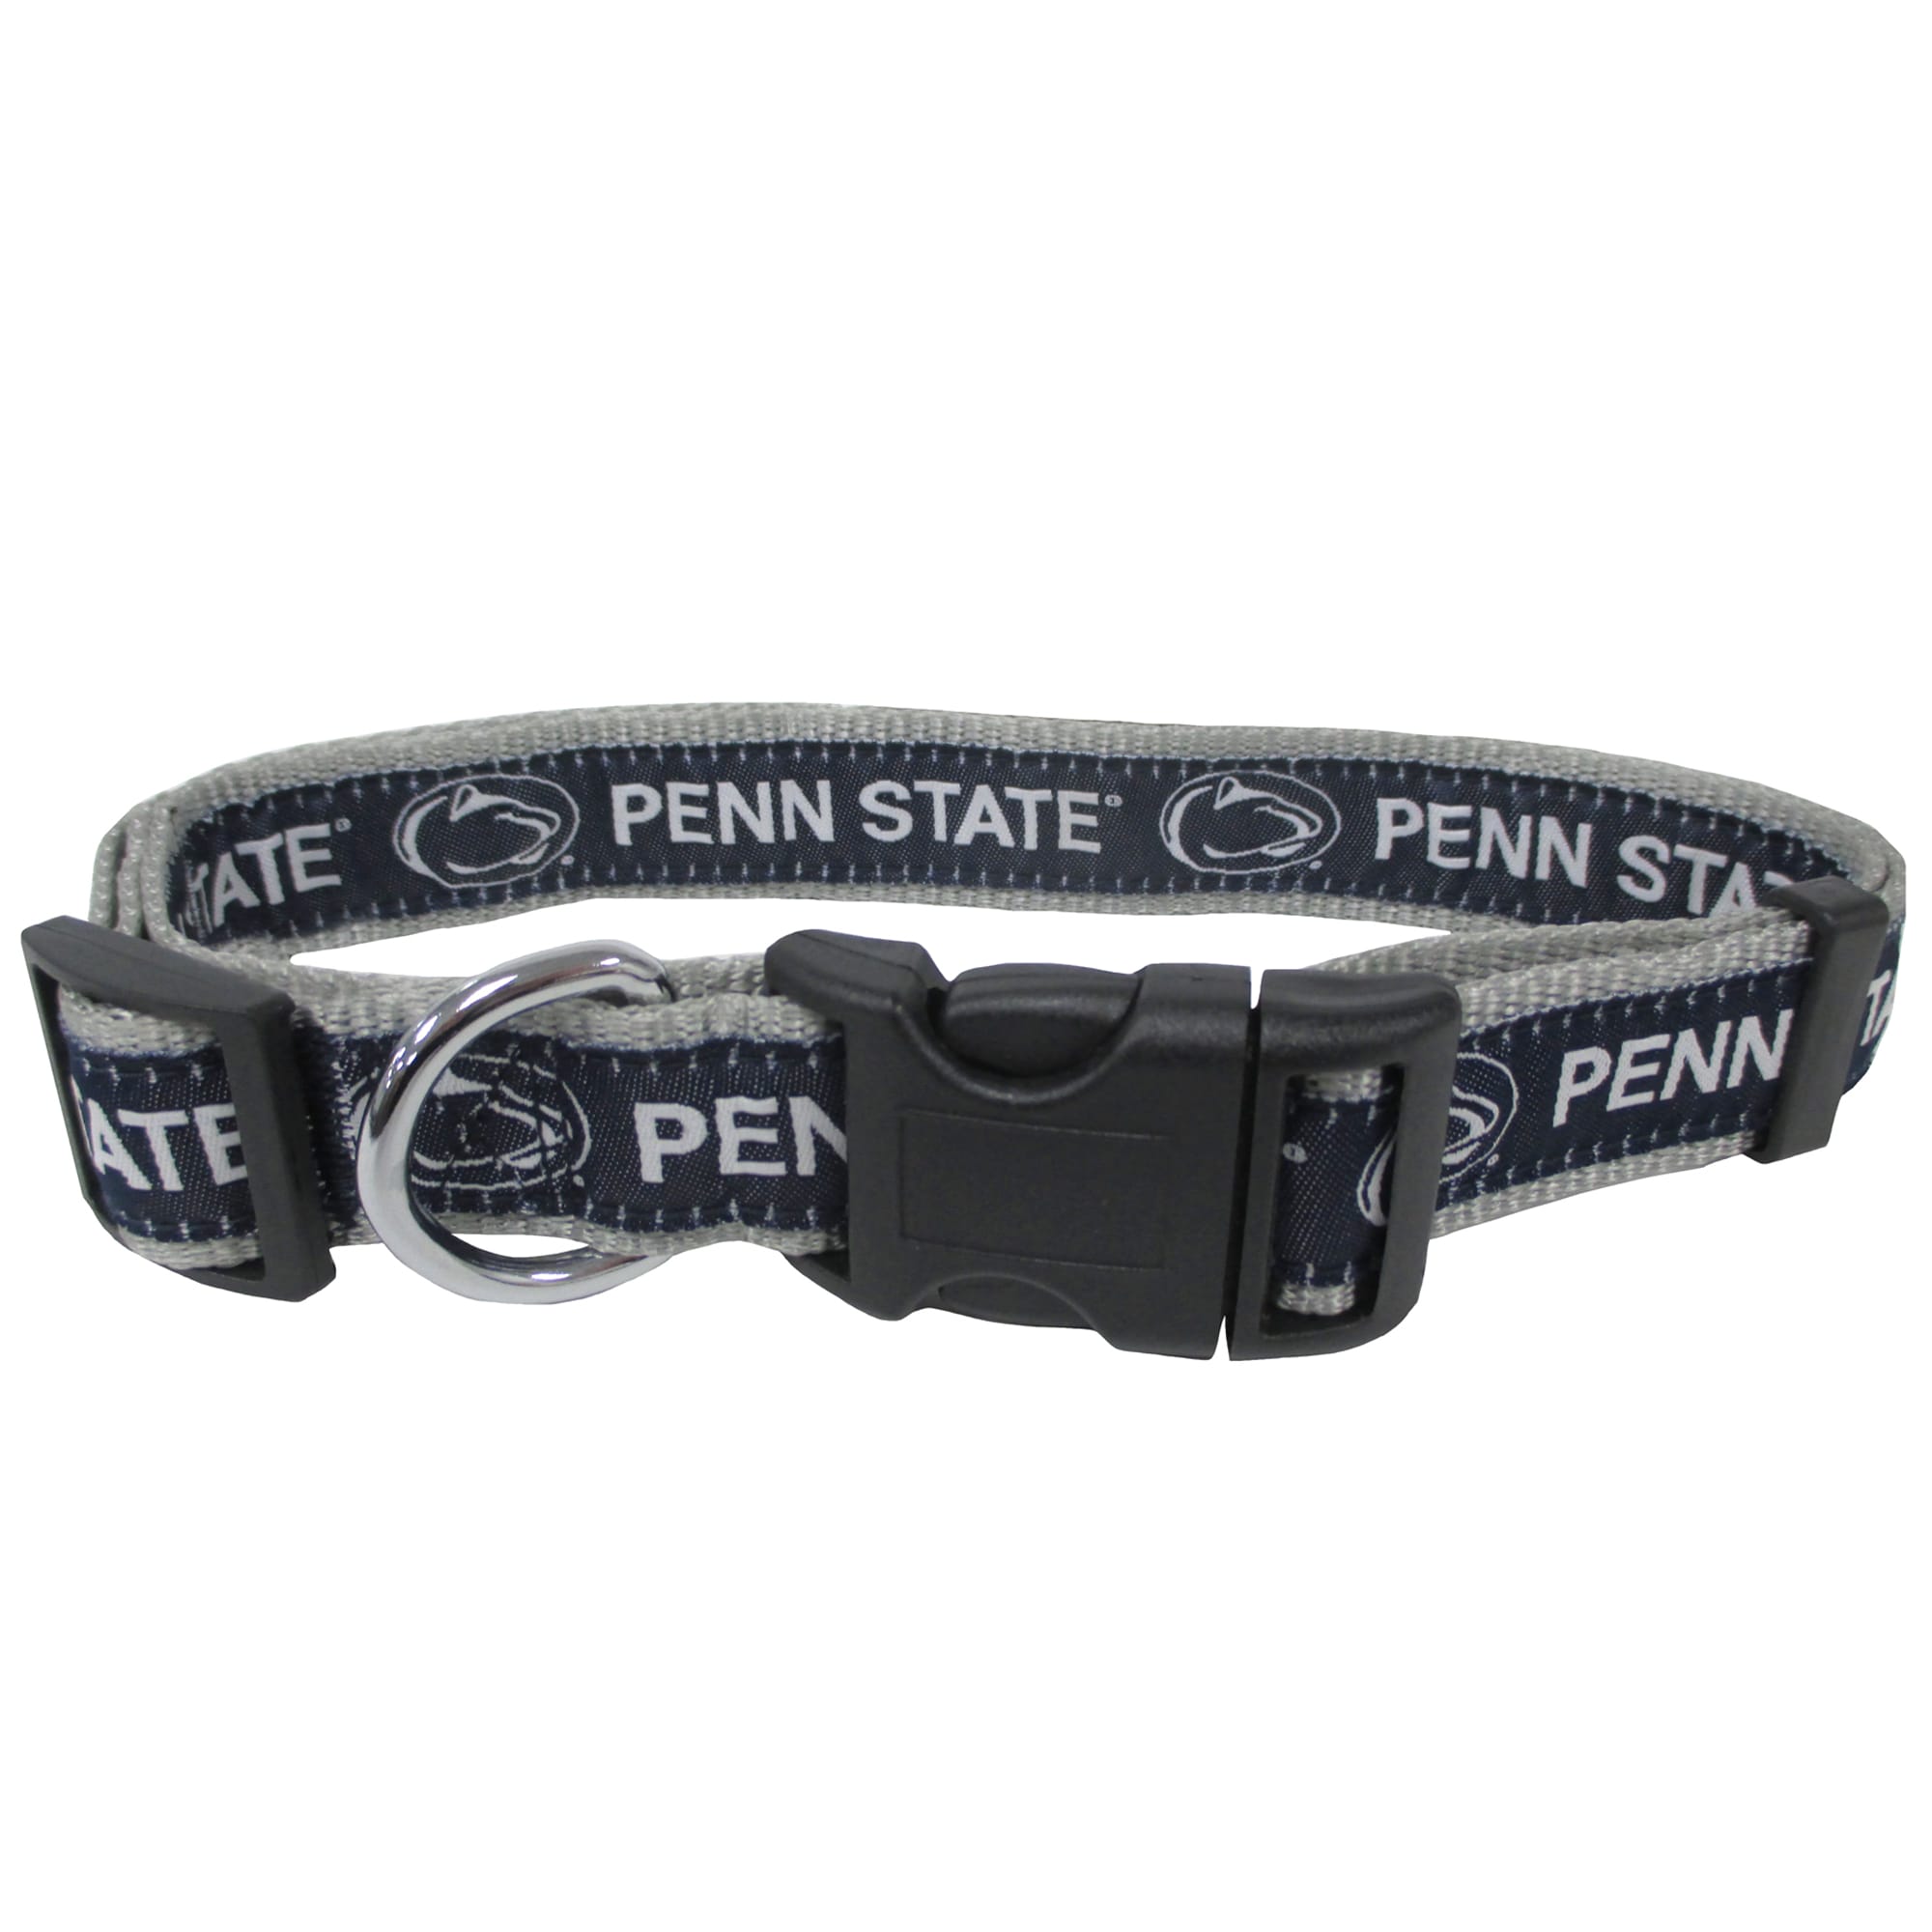 penn state dog harness